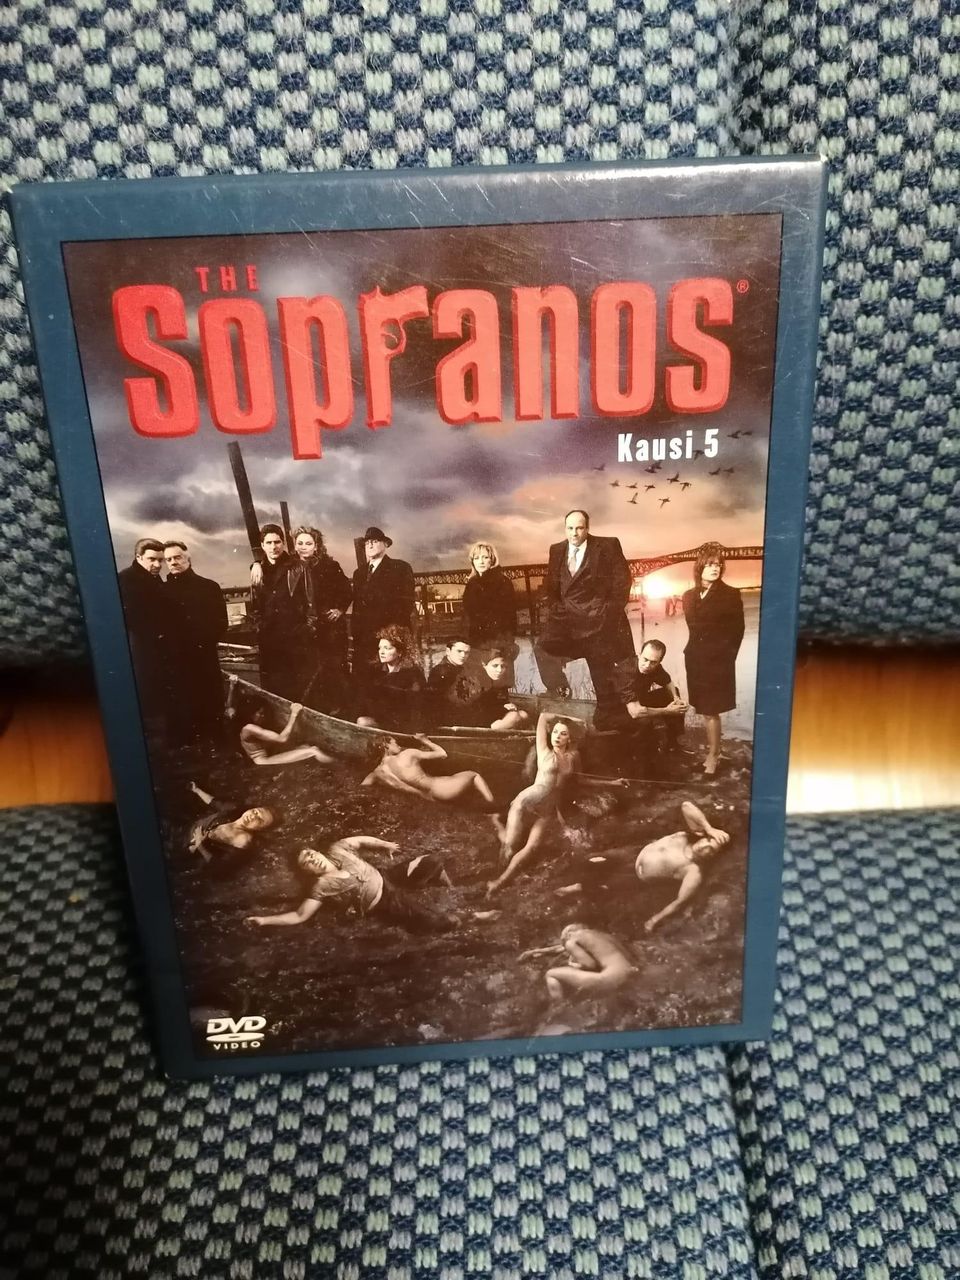 Sopranos